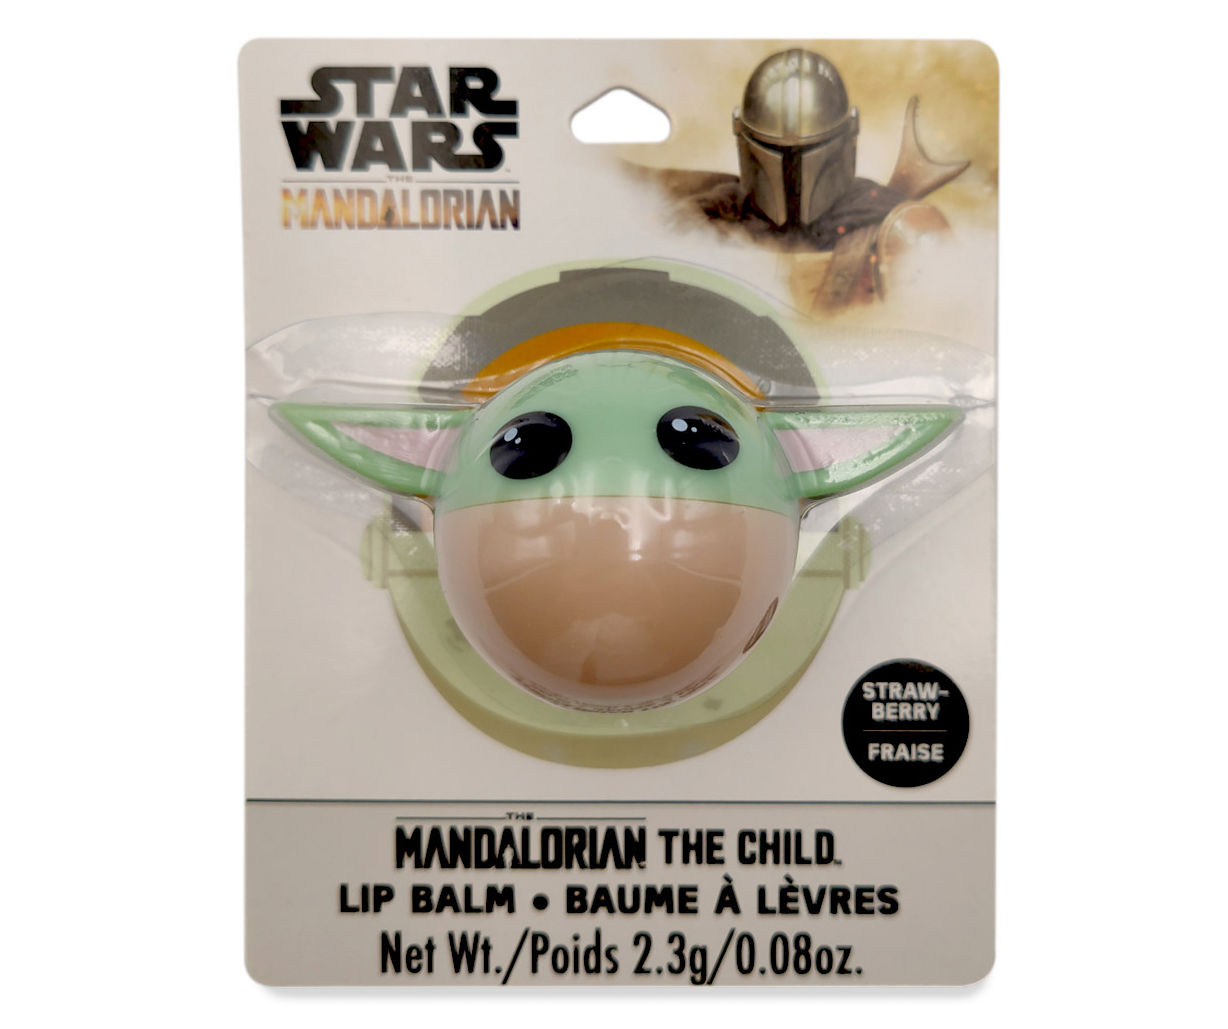 Star Wars The Mandalorian The Child Flavored Lip Balm Set